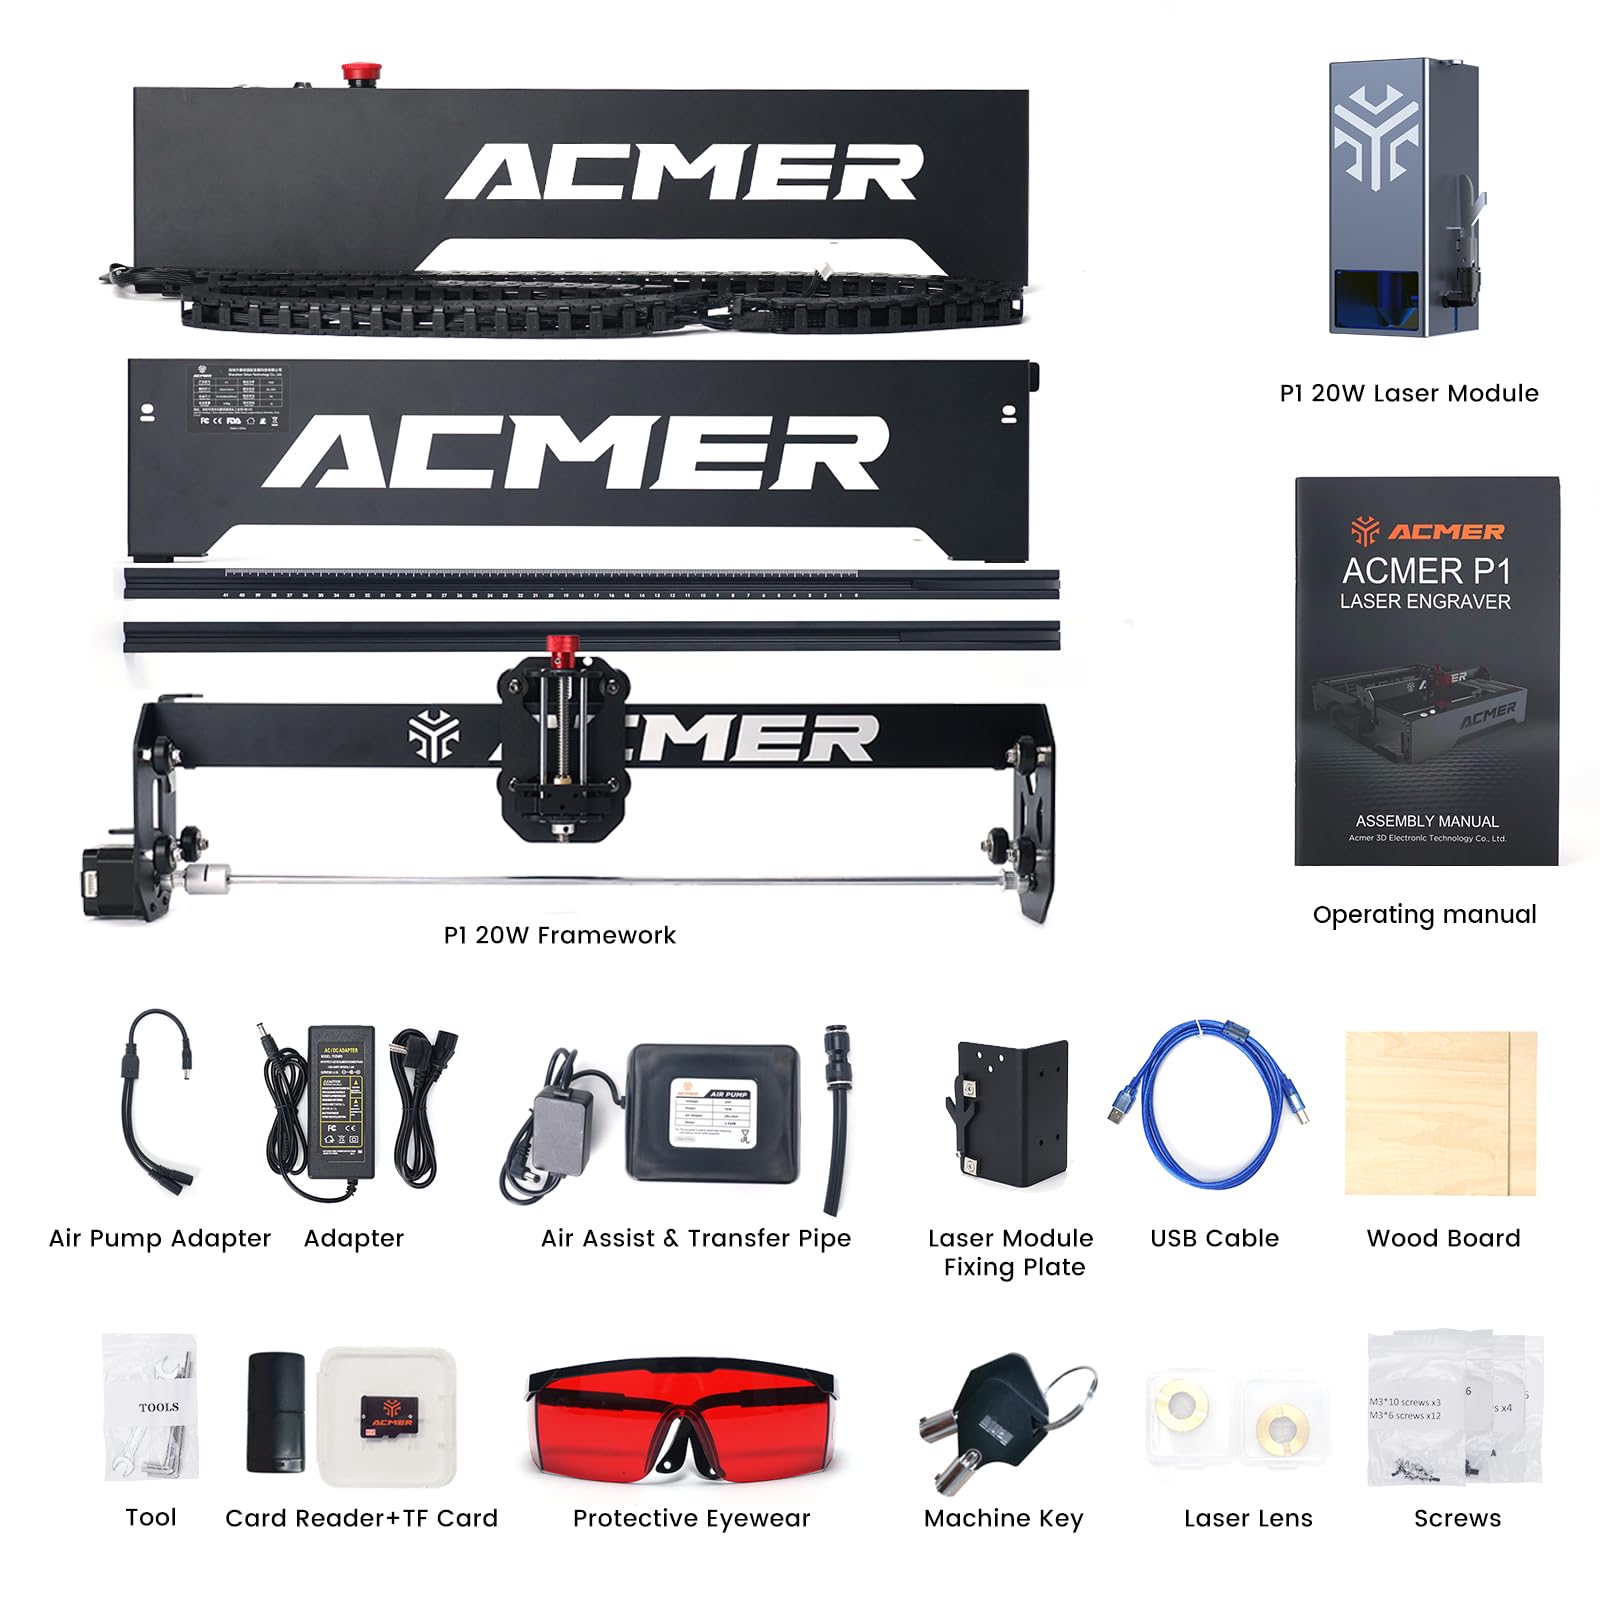 Acmer P1 20W Laser Engraver